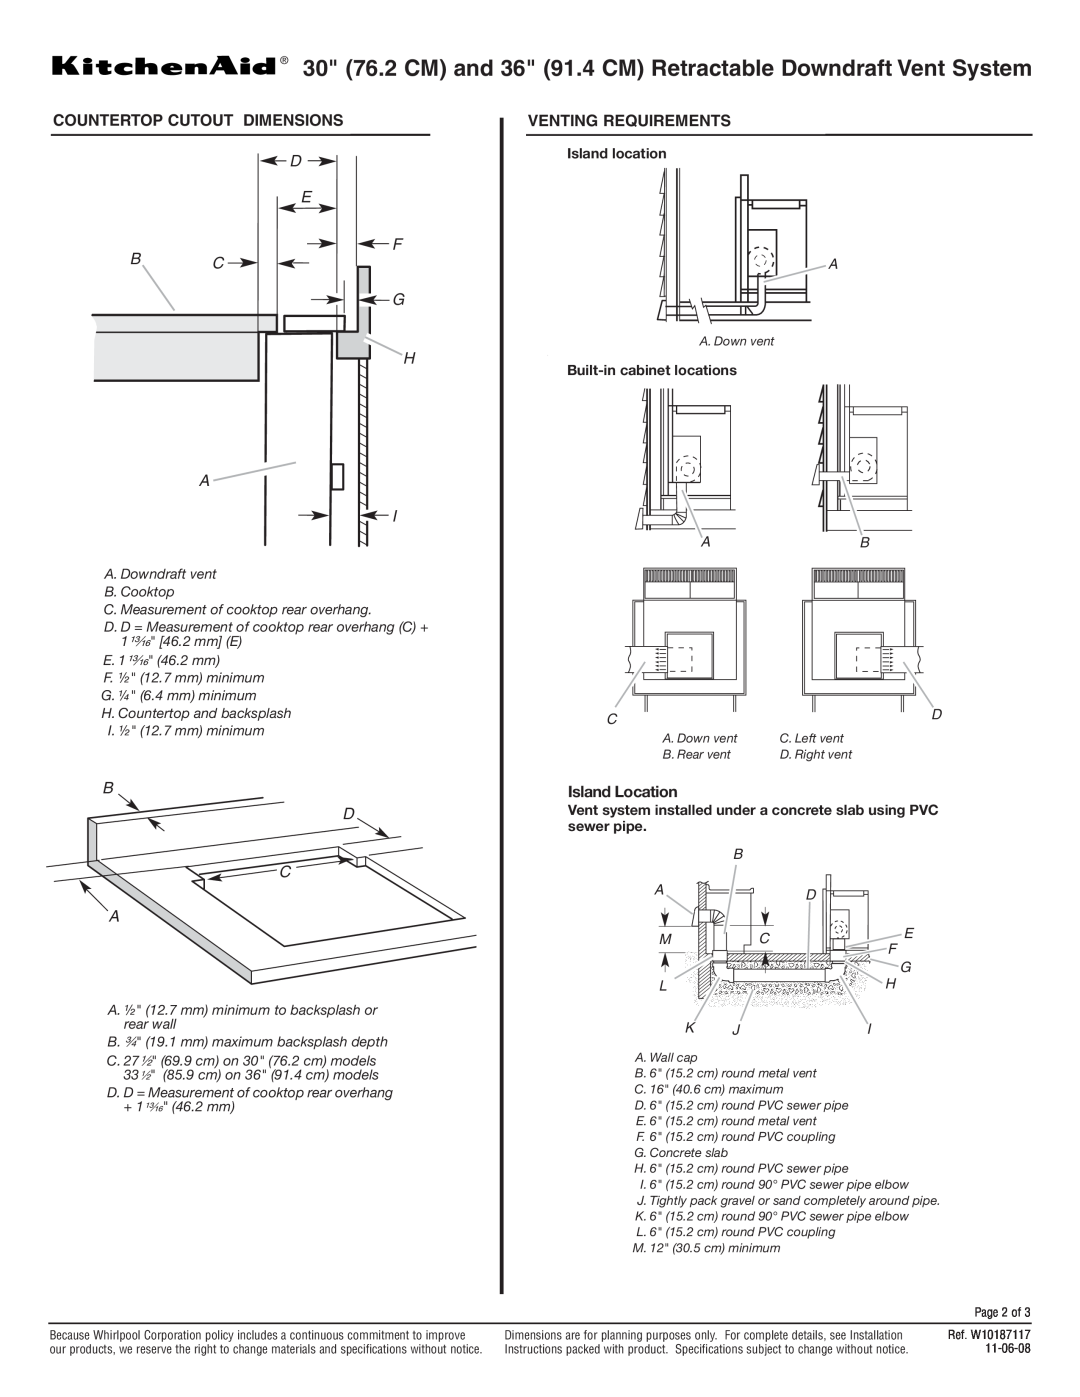 KitchenAid KIRD861V Countertop Cutout Dimensions, D E F B C G H A I, B D C A, Venting Requirements, Island Location, K Ji 